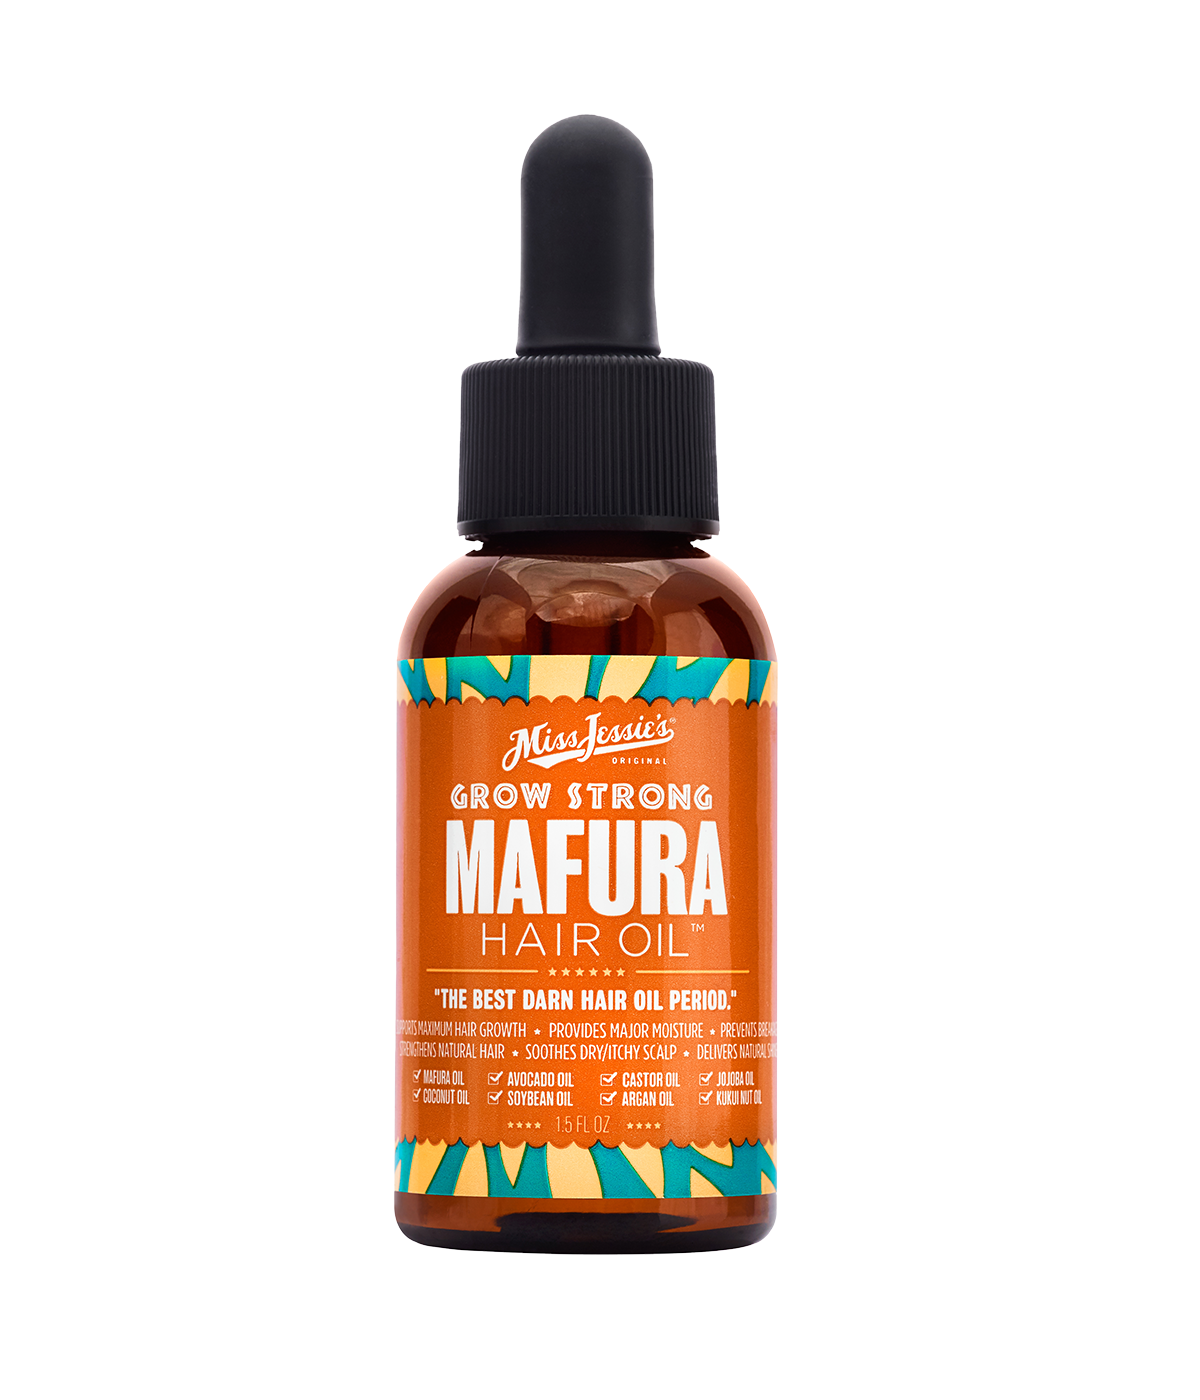 Mafura hair oil